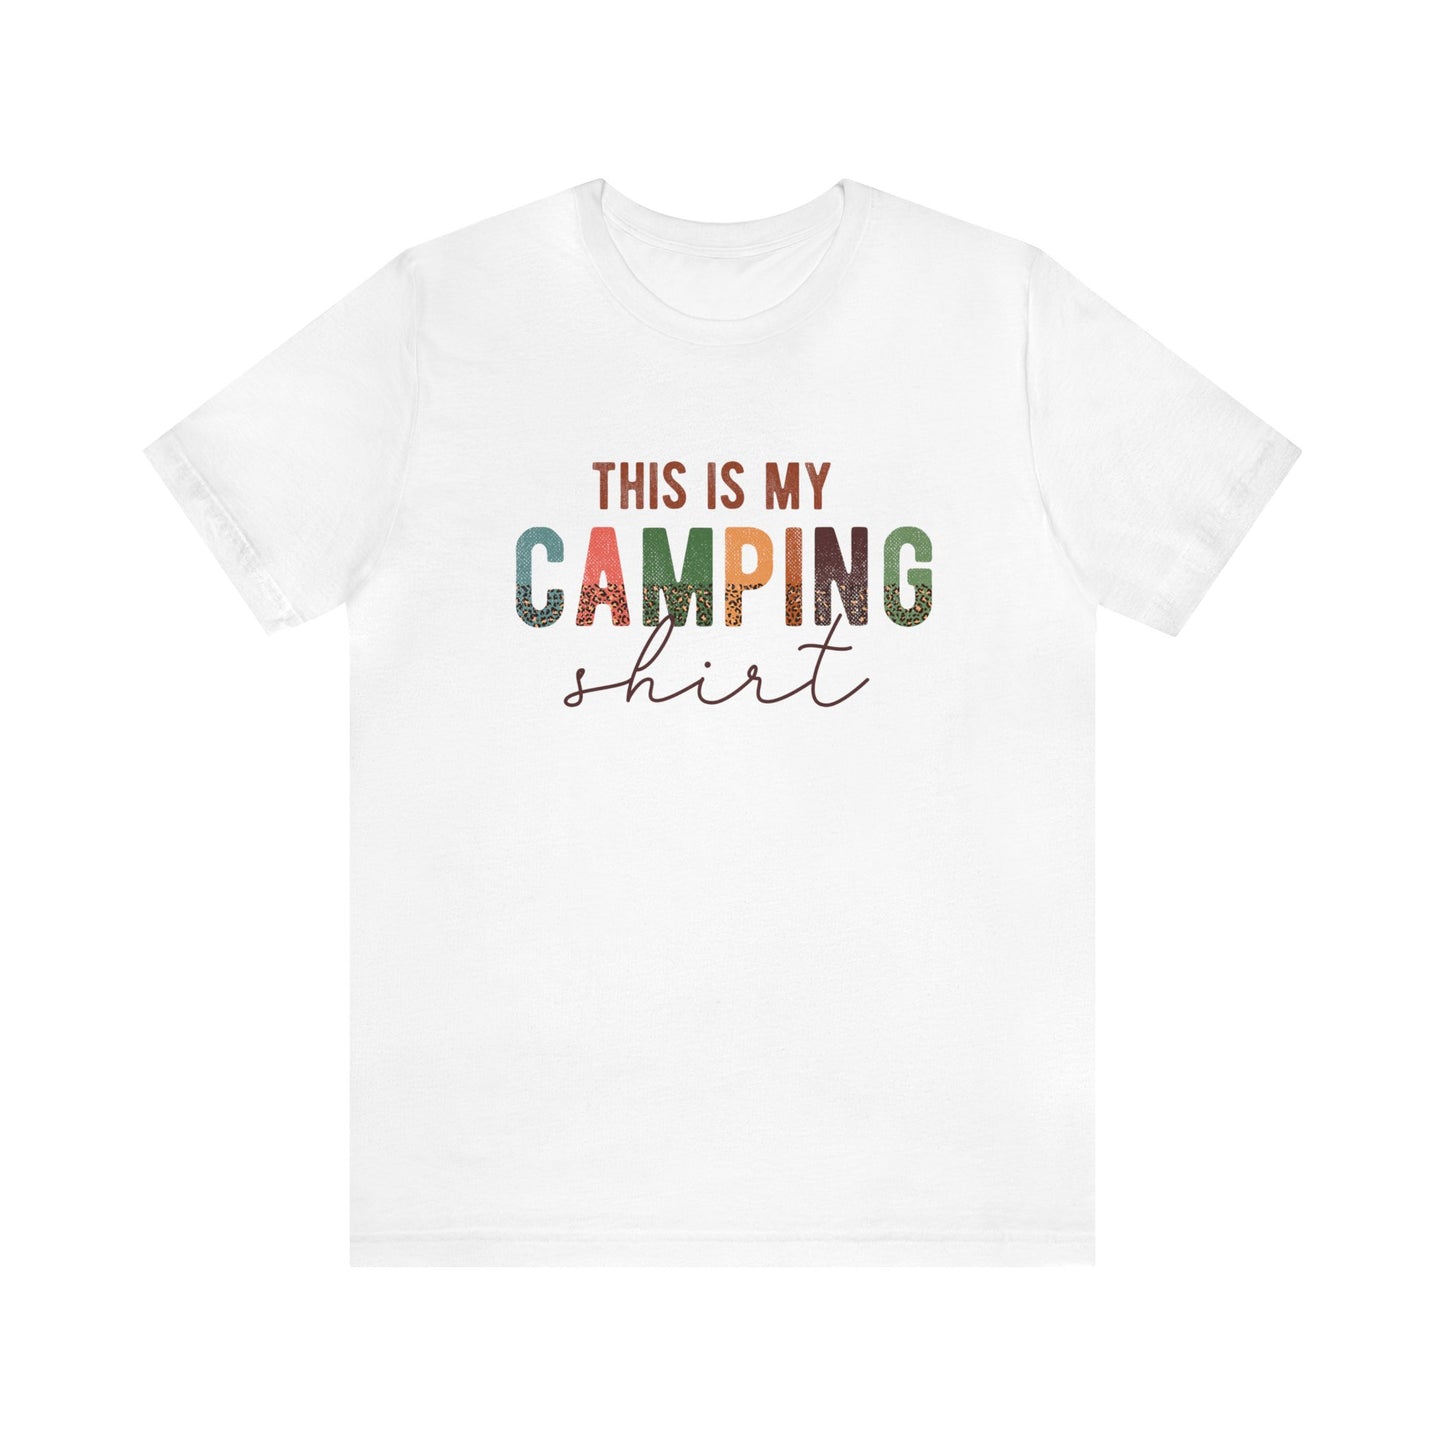 This is my camping shirt Women's Tshirt